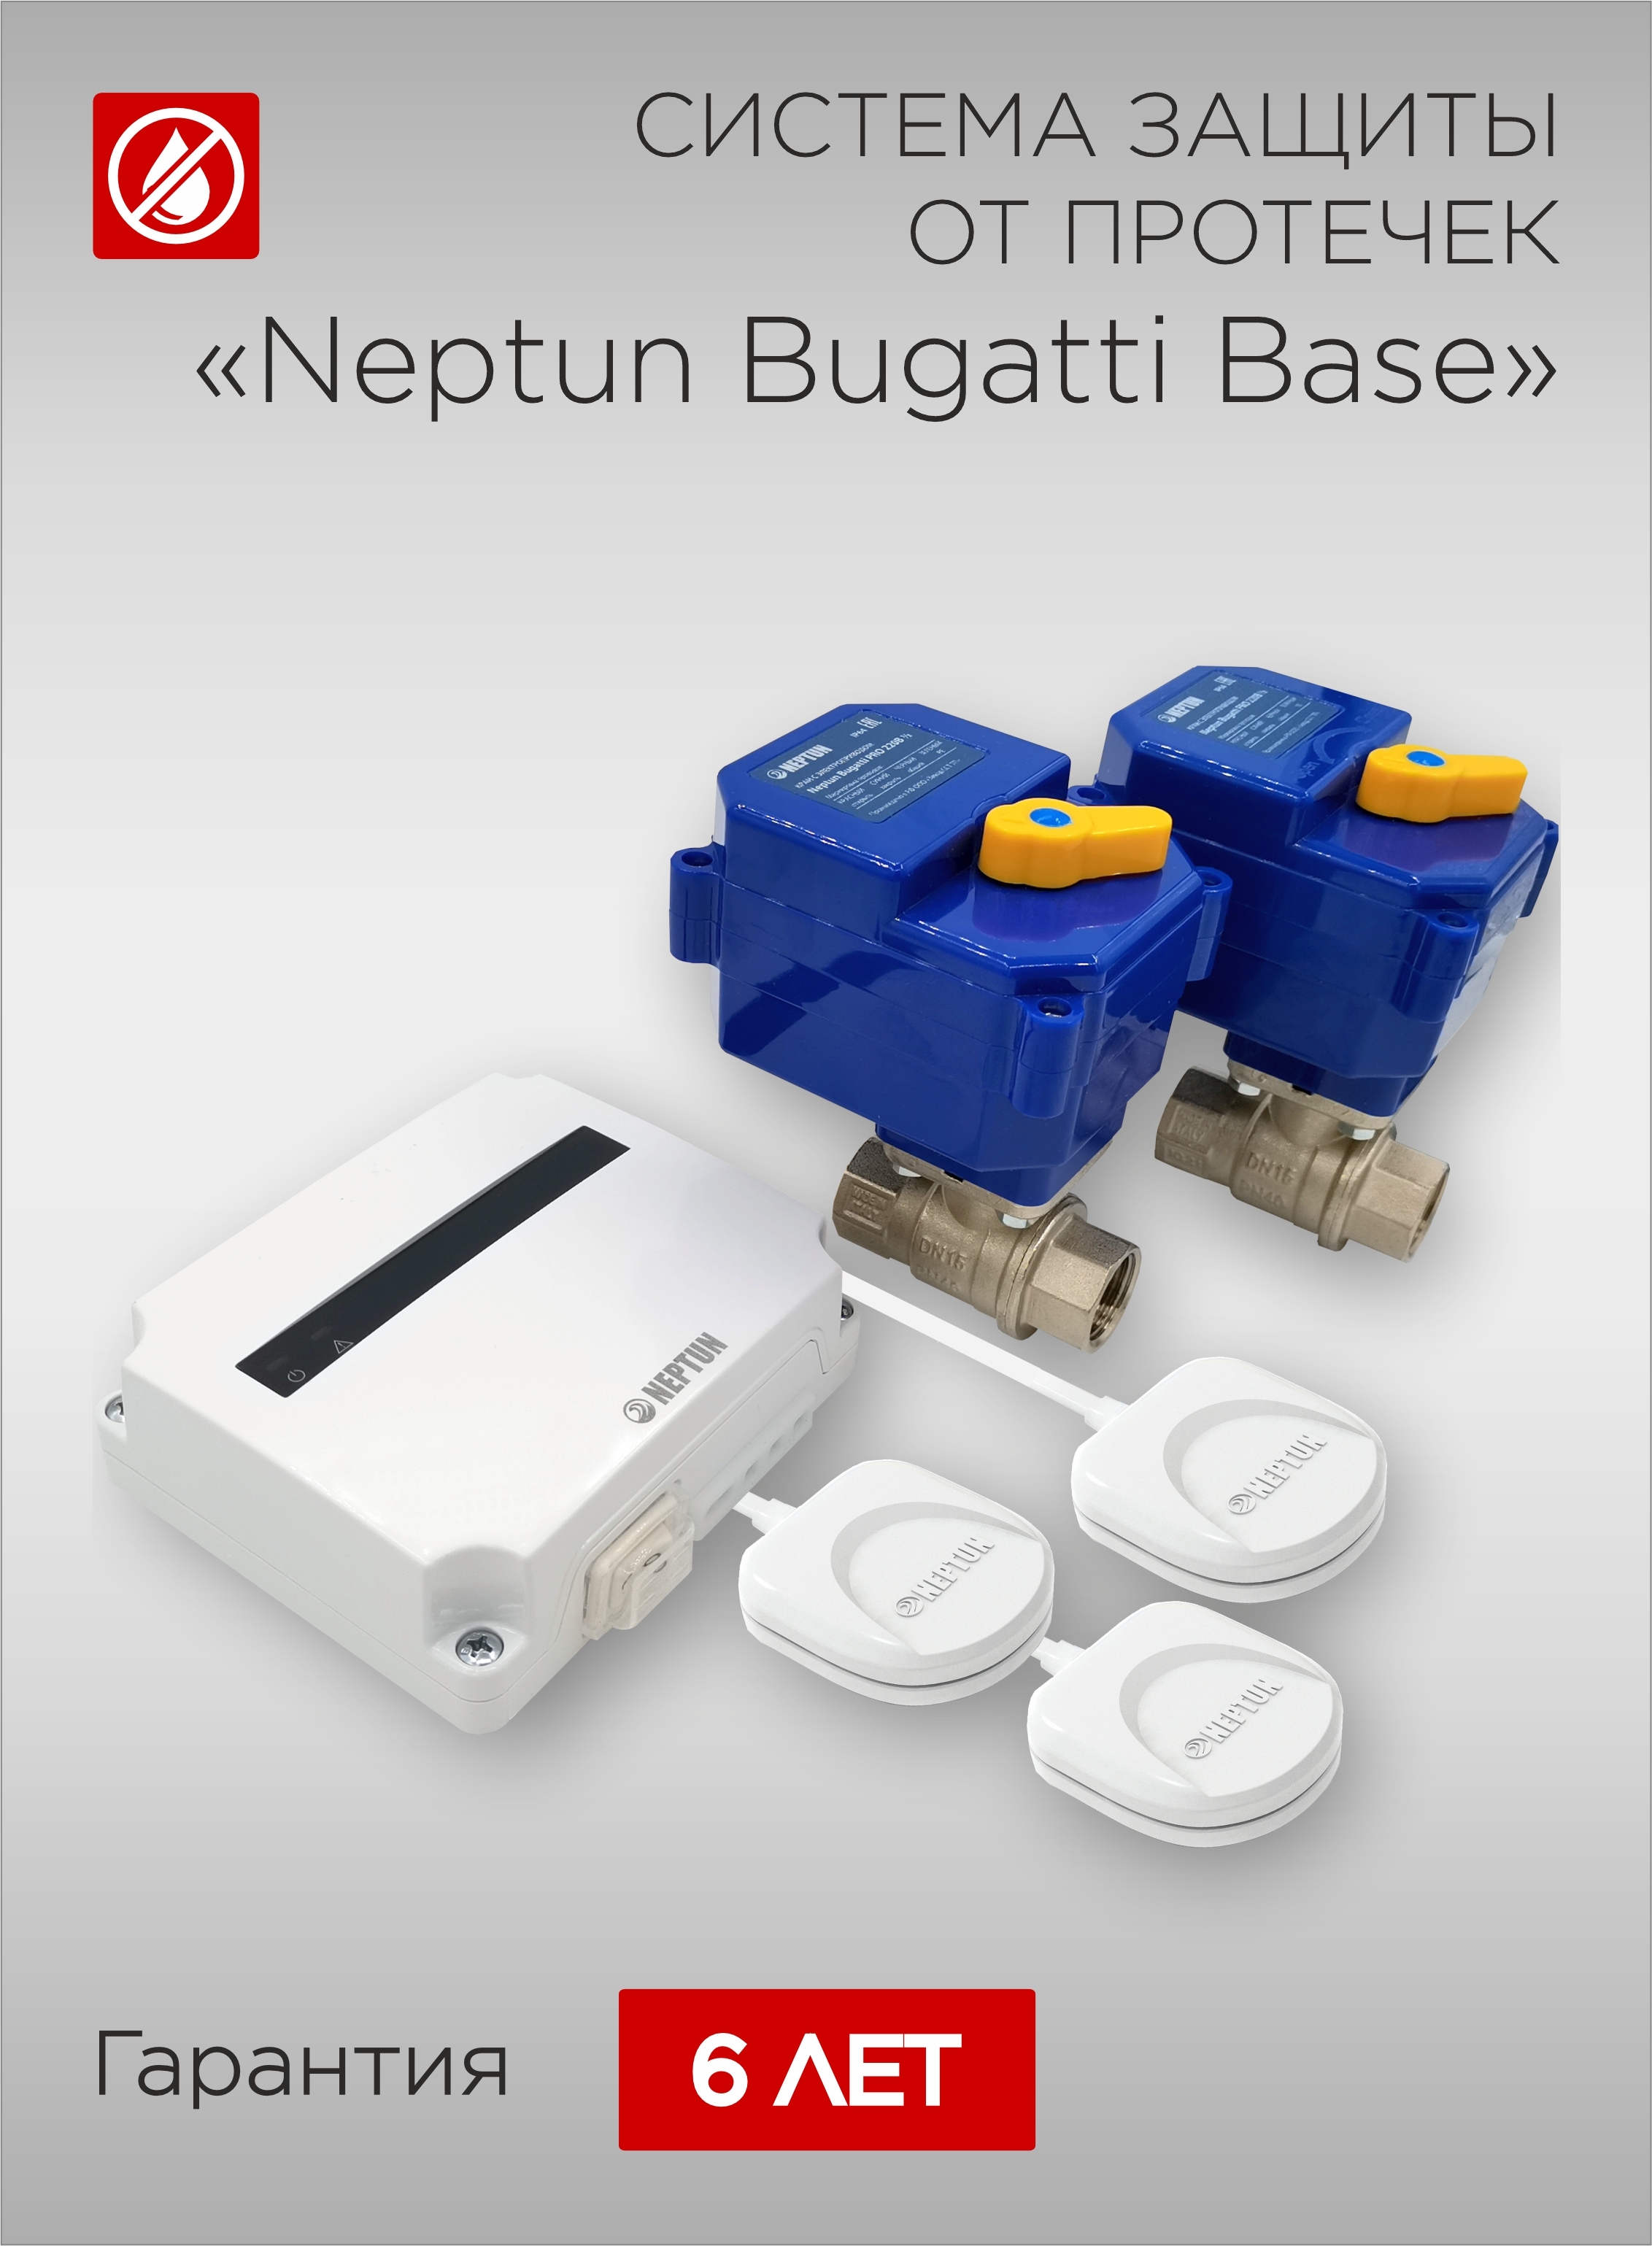 Система контроля протечки воды neptun bugatti base 1 2